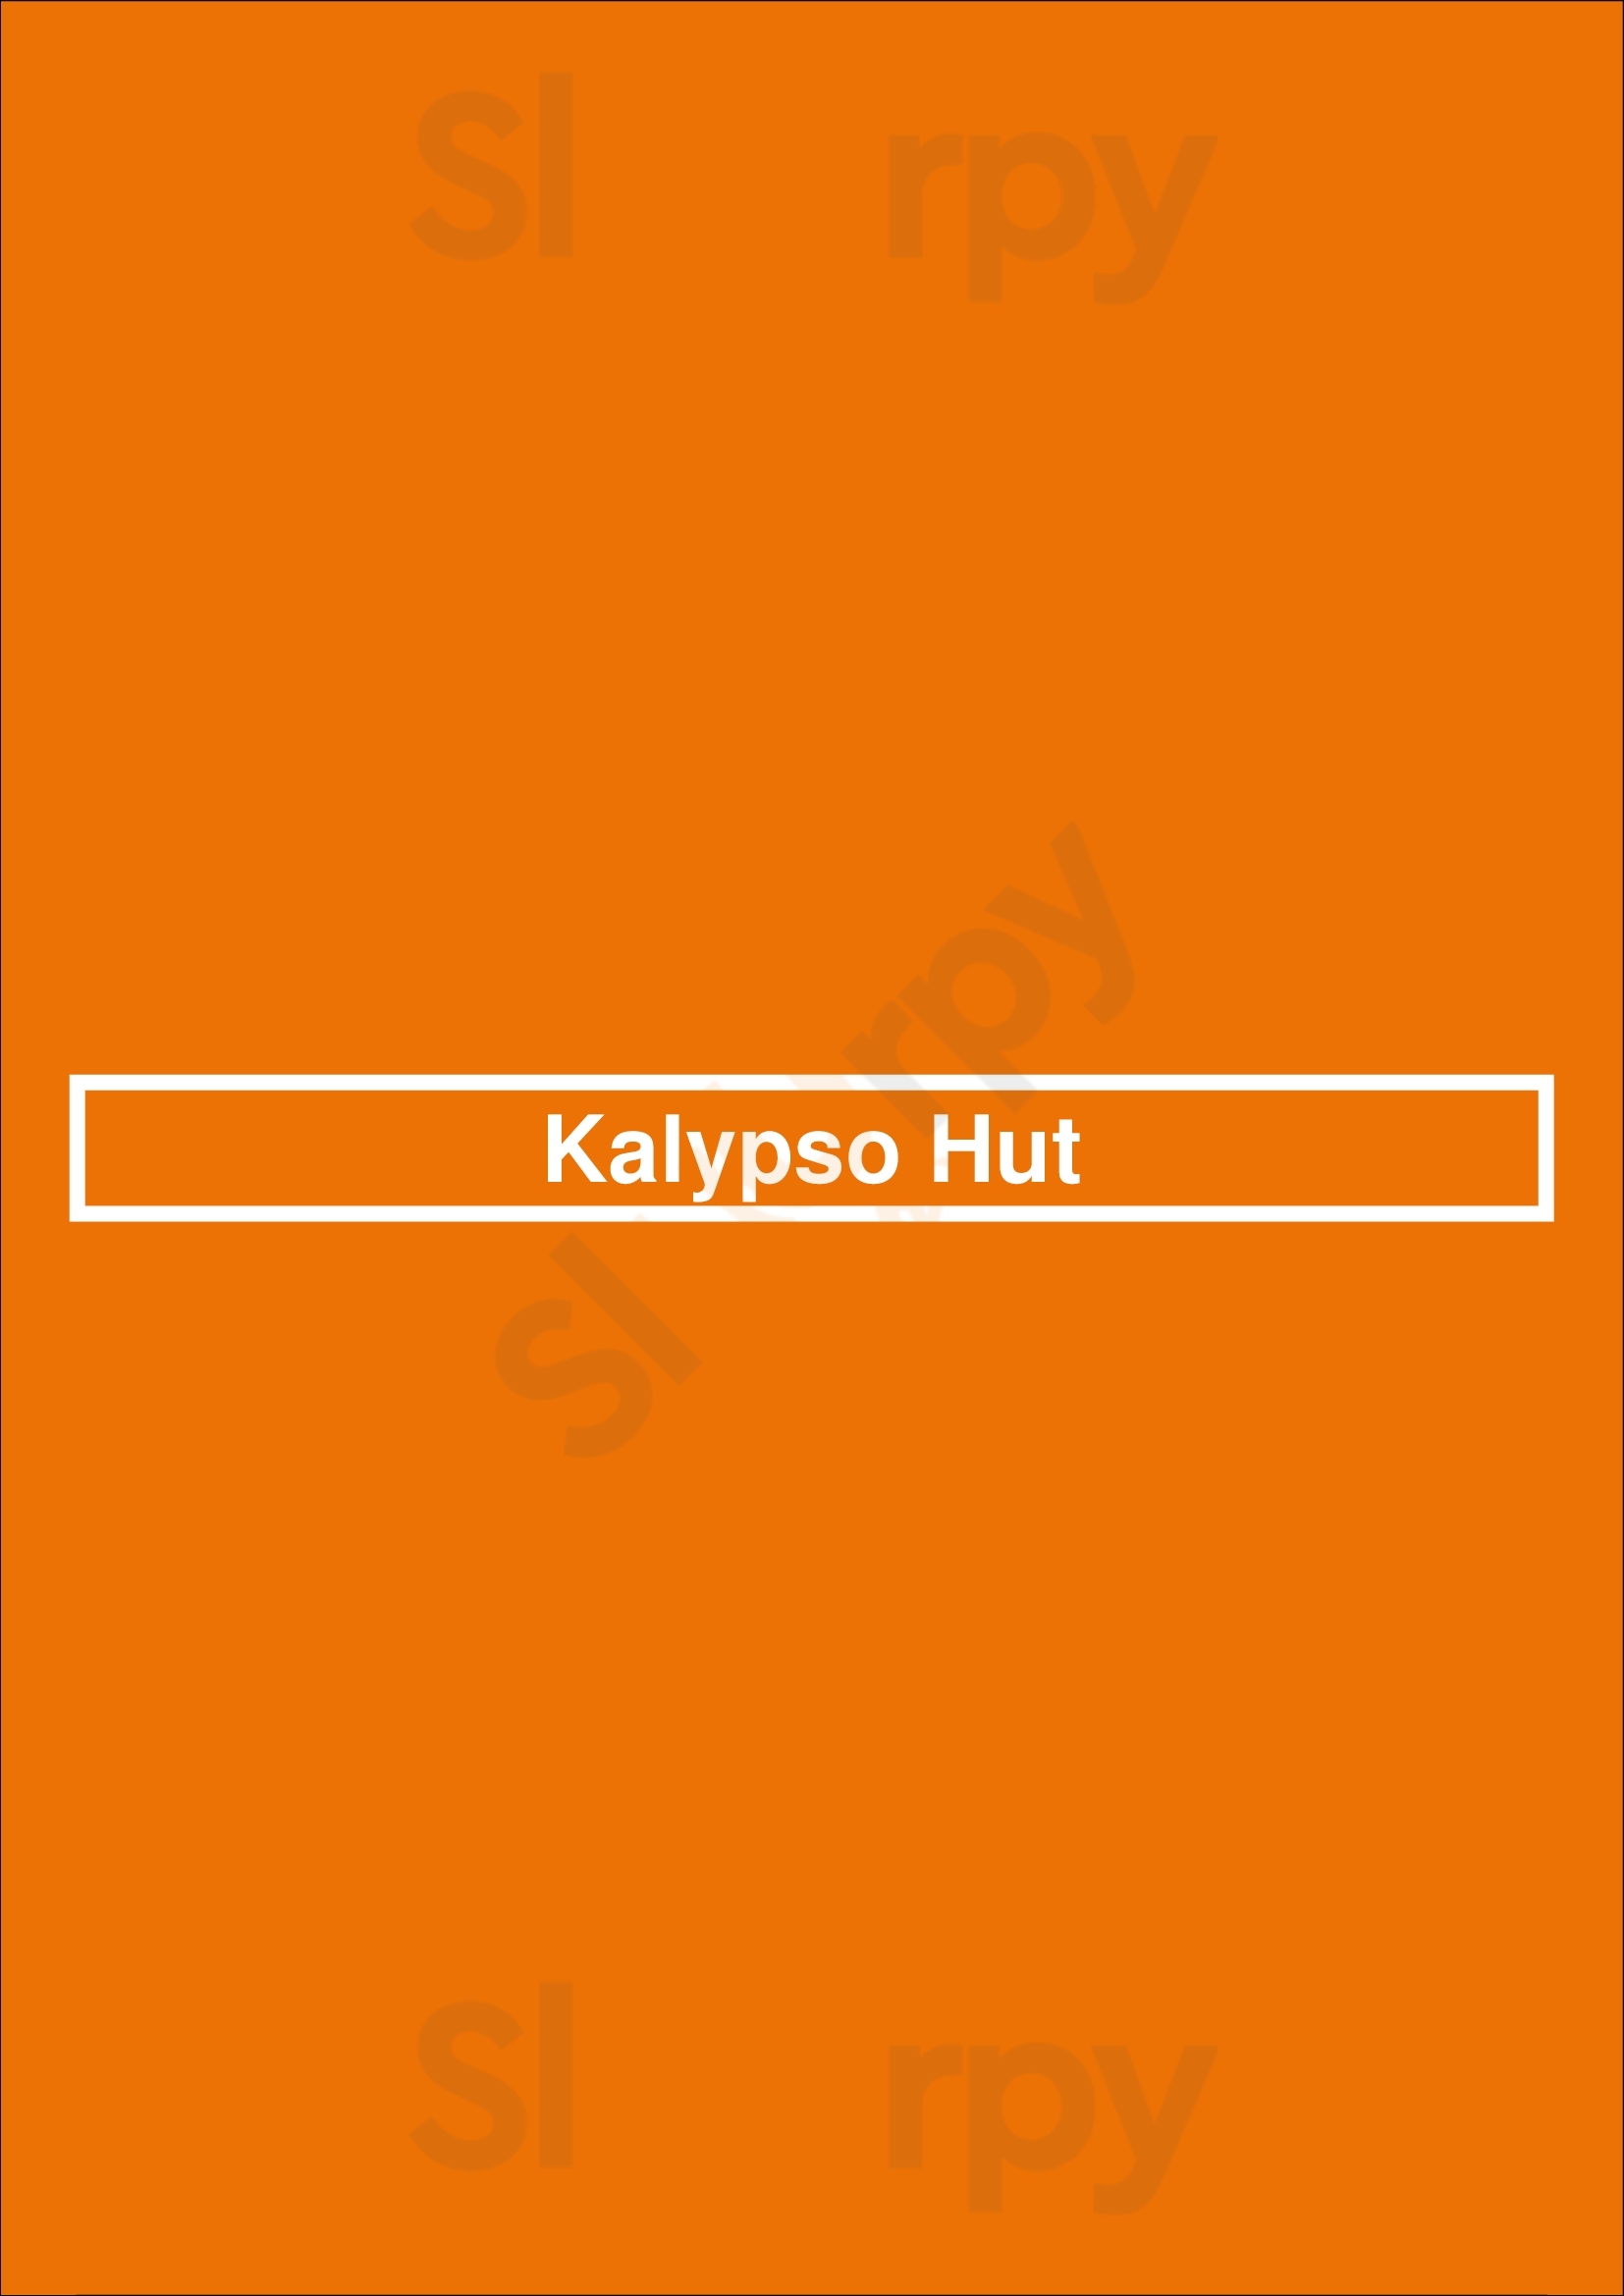 Kalypso Hut Mississauga Menu - 1